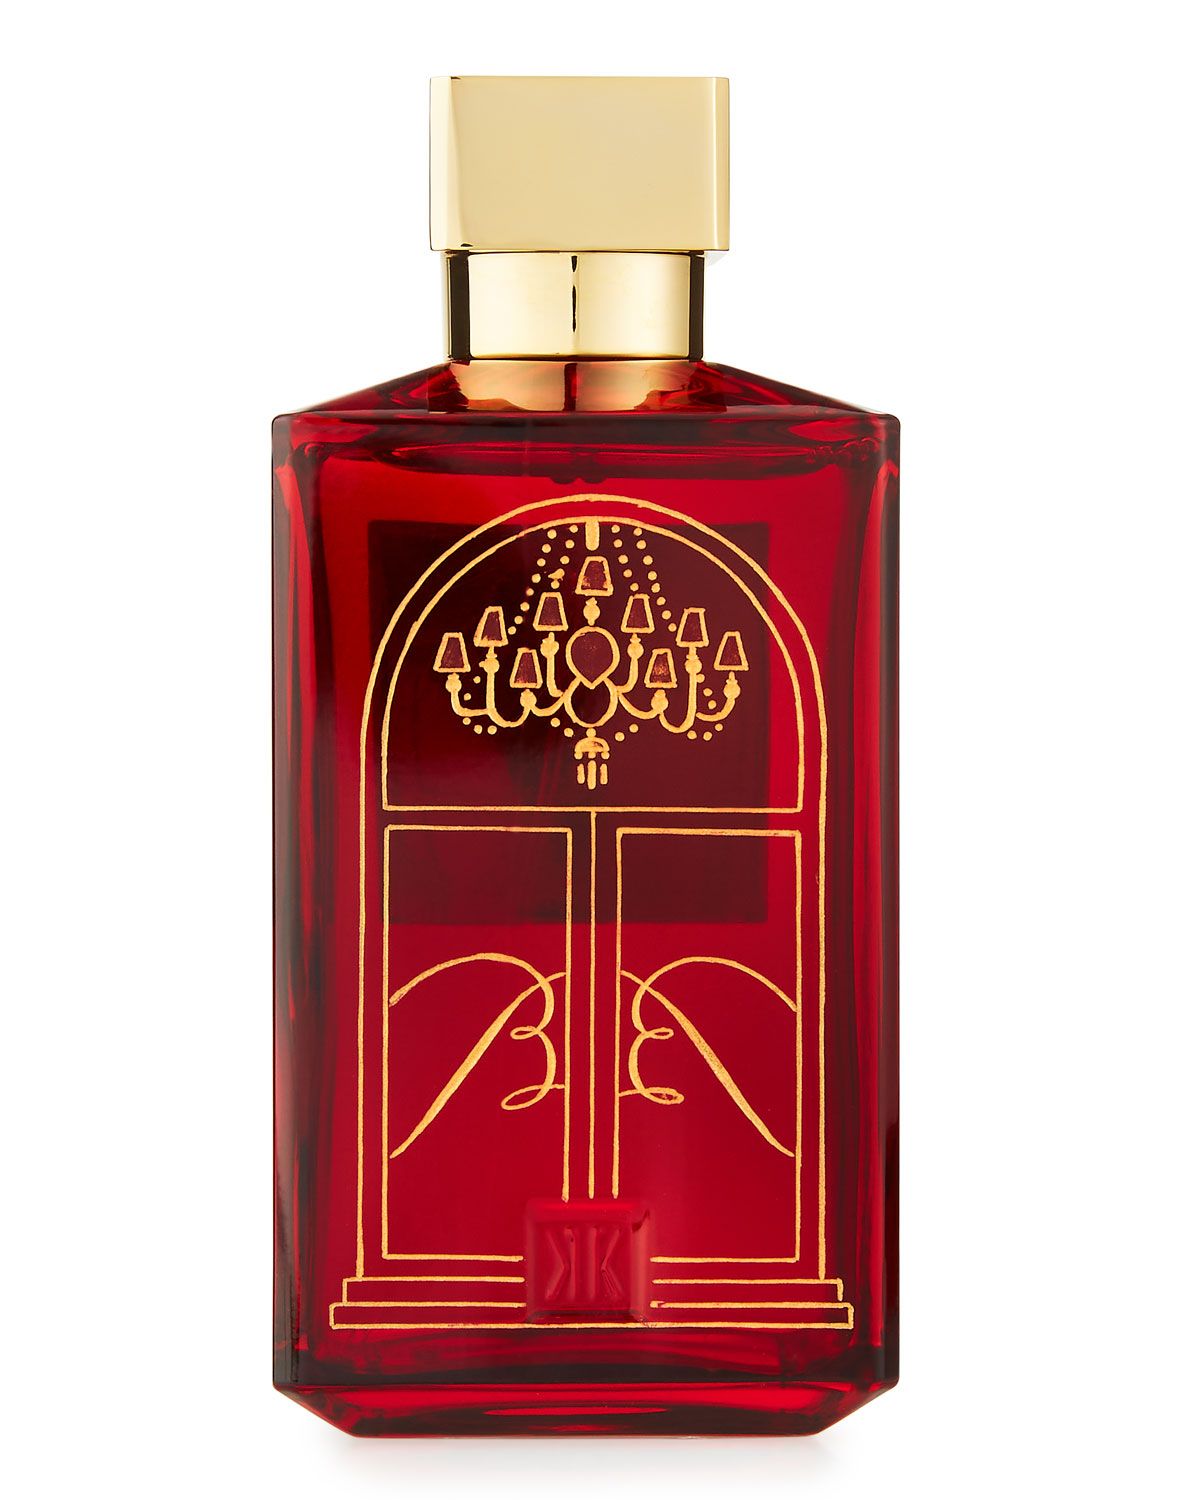 Baccarat Rouge 540 Extrait Limited Edition Maison Francis Kurkdjian - una novità fragranza ...